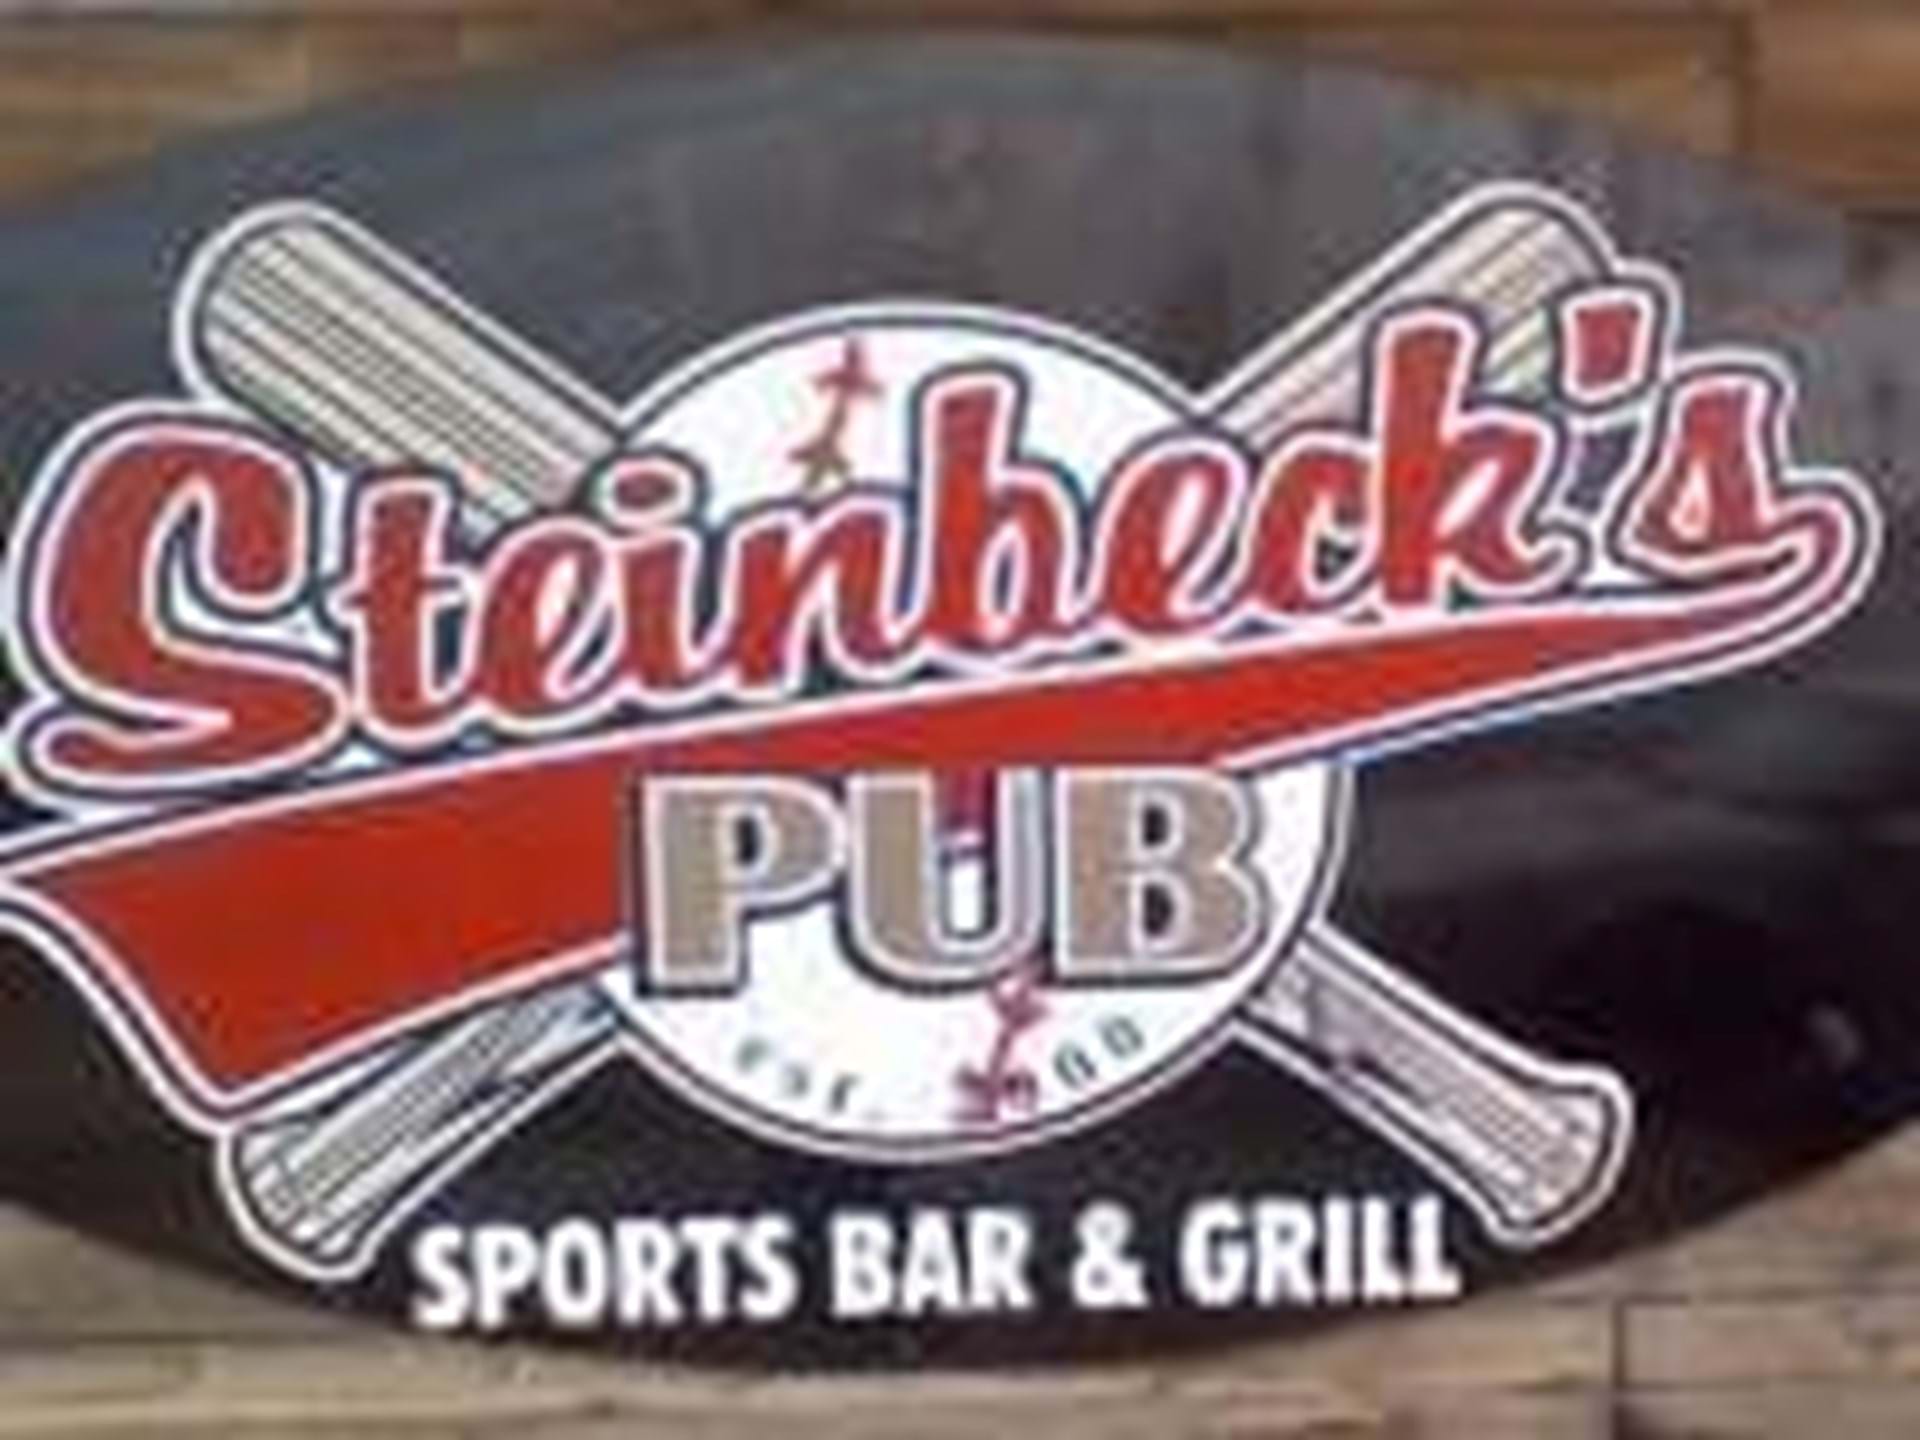 Steinbeck's Pub - Sports Bar & Grill